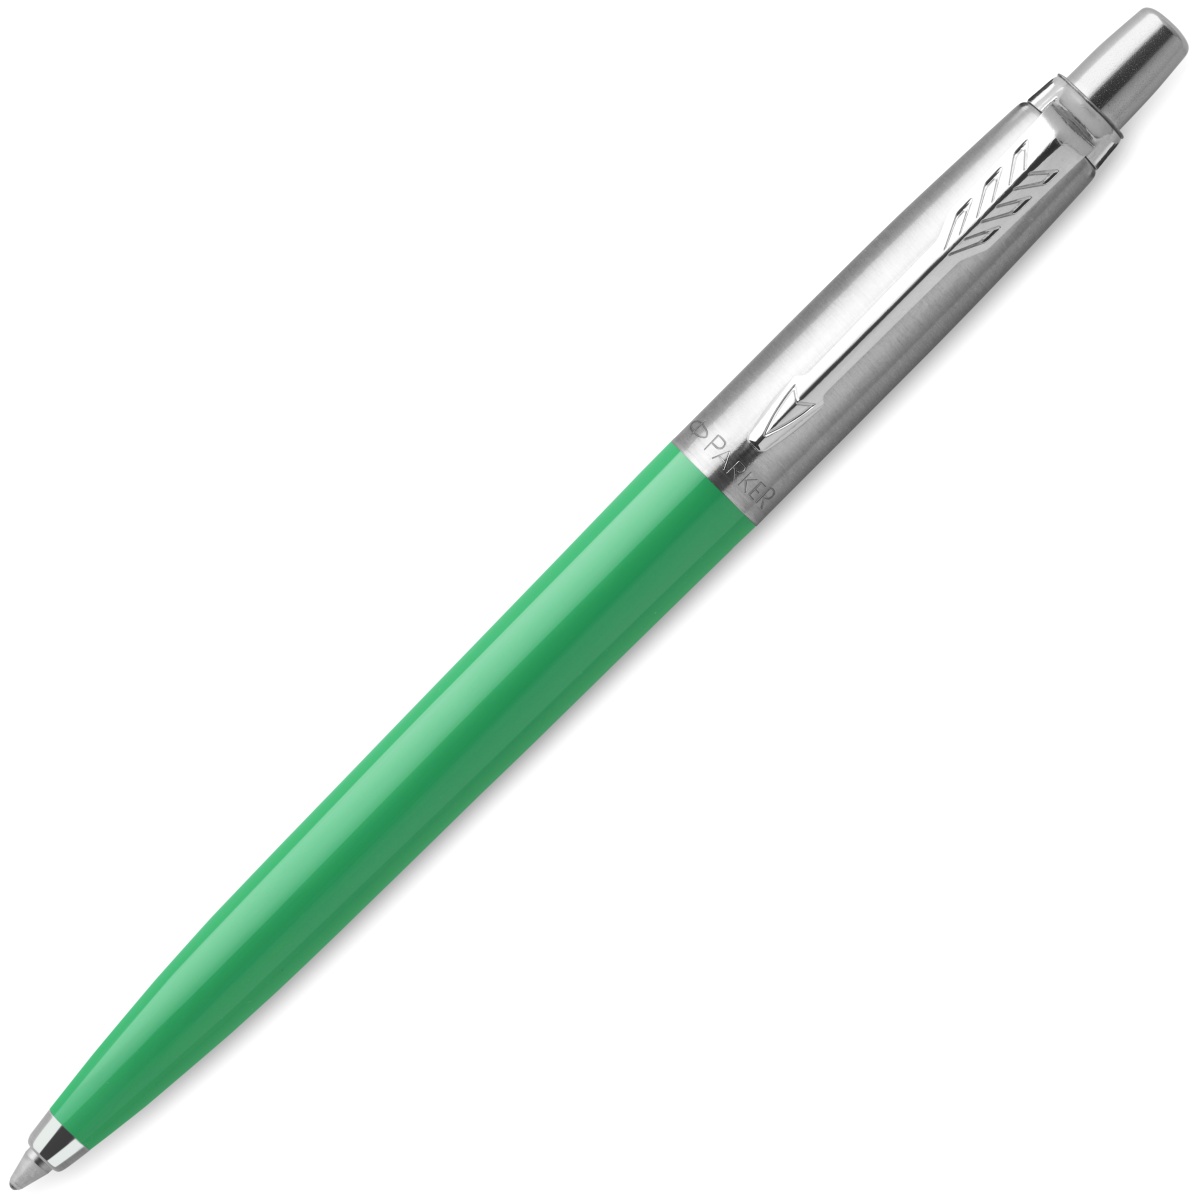  Шариковая ручка Parker Jotter K60 Originals Color Plastic 2019, Green СT, фото 2